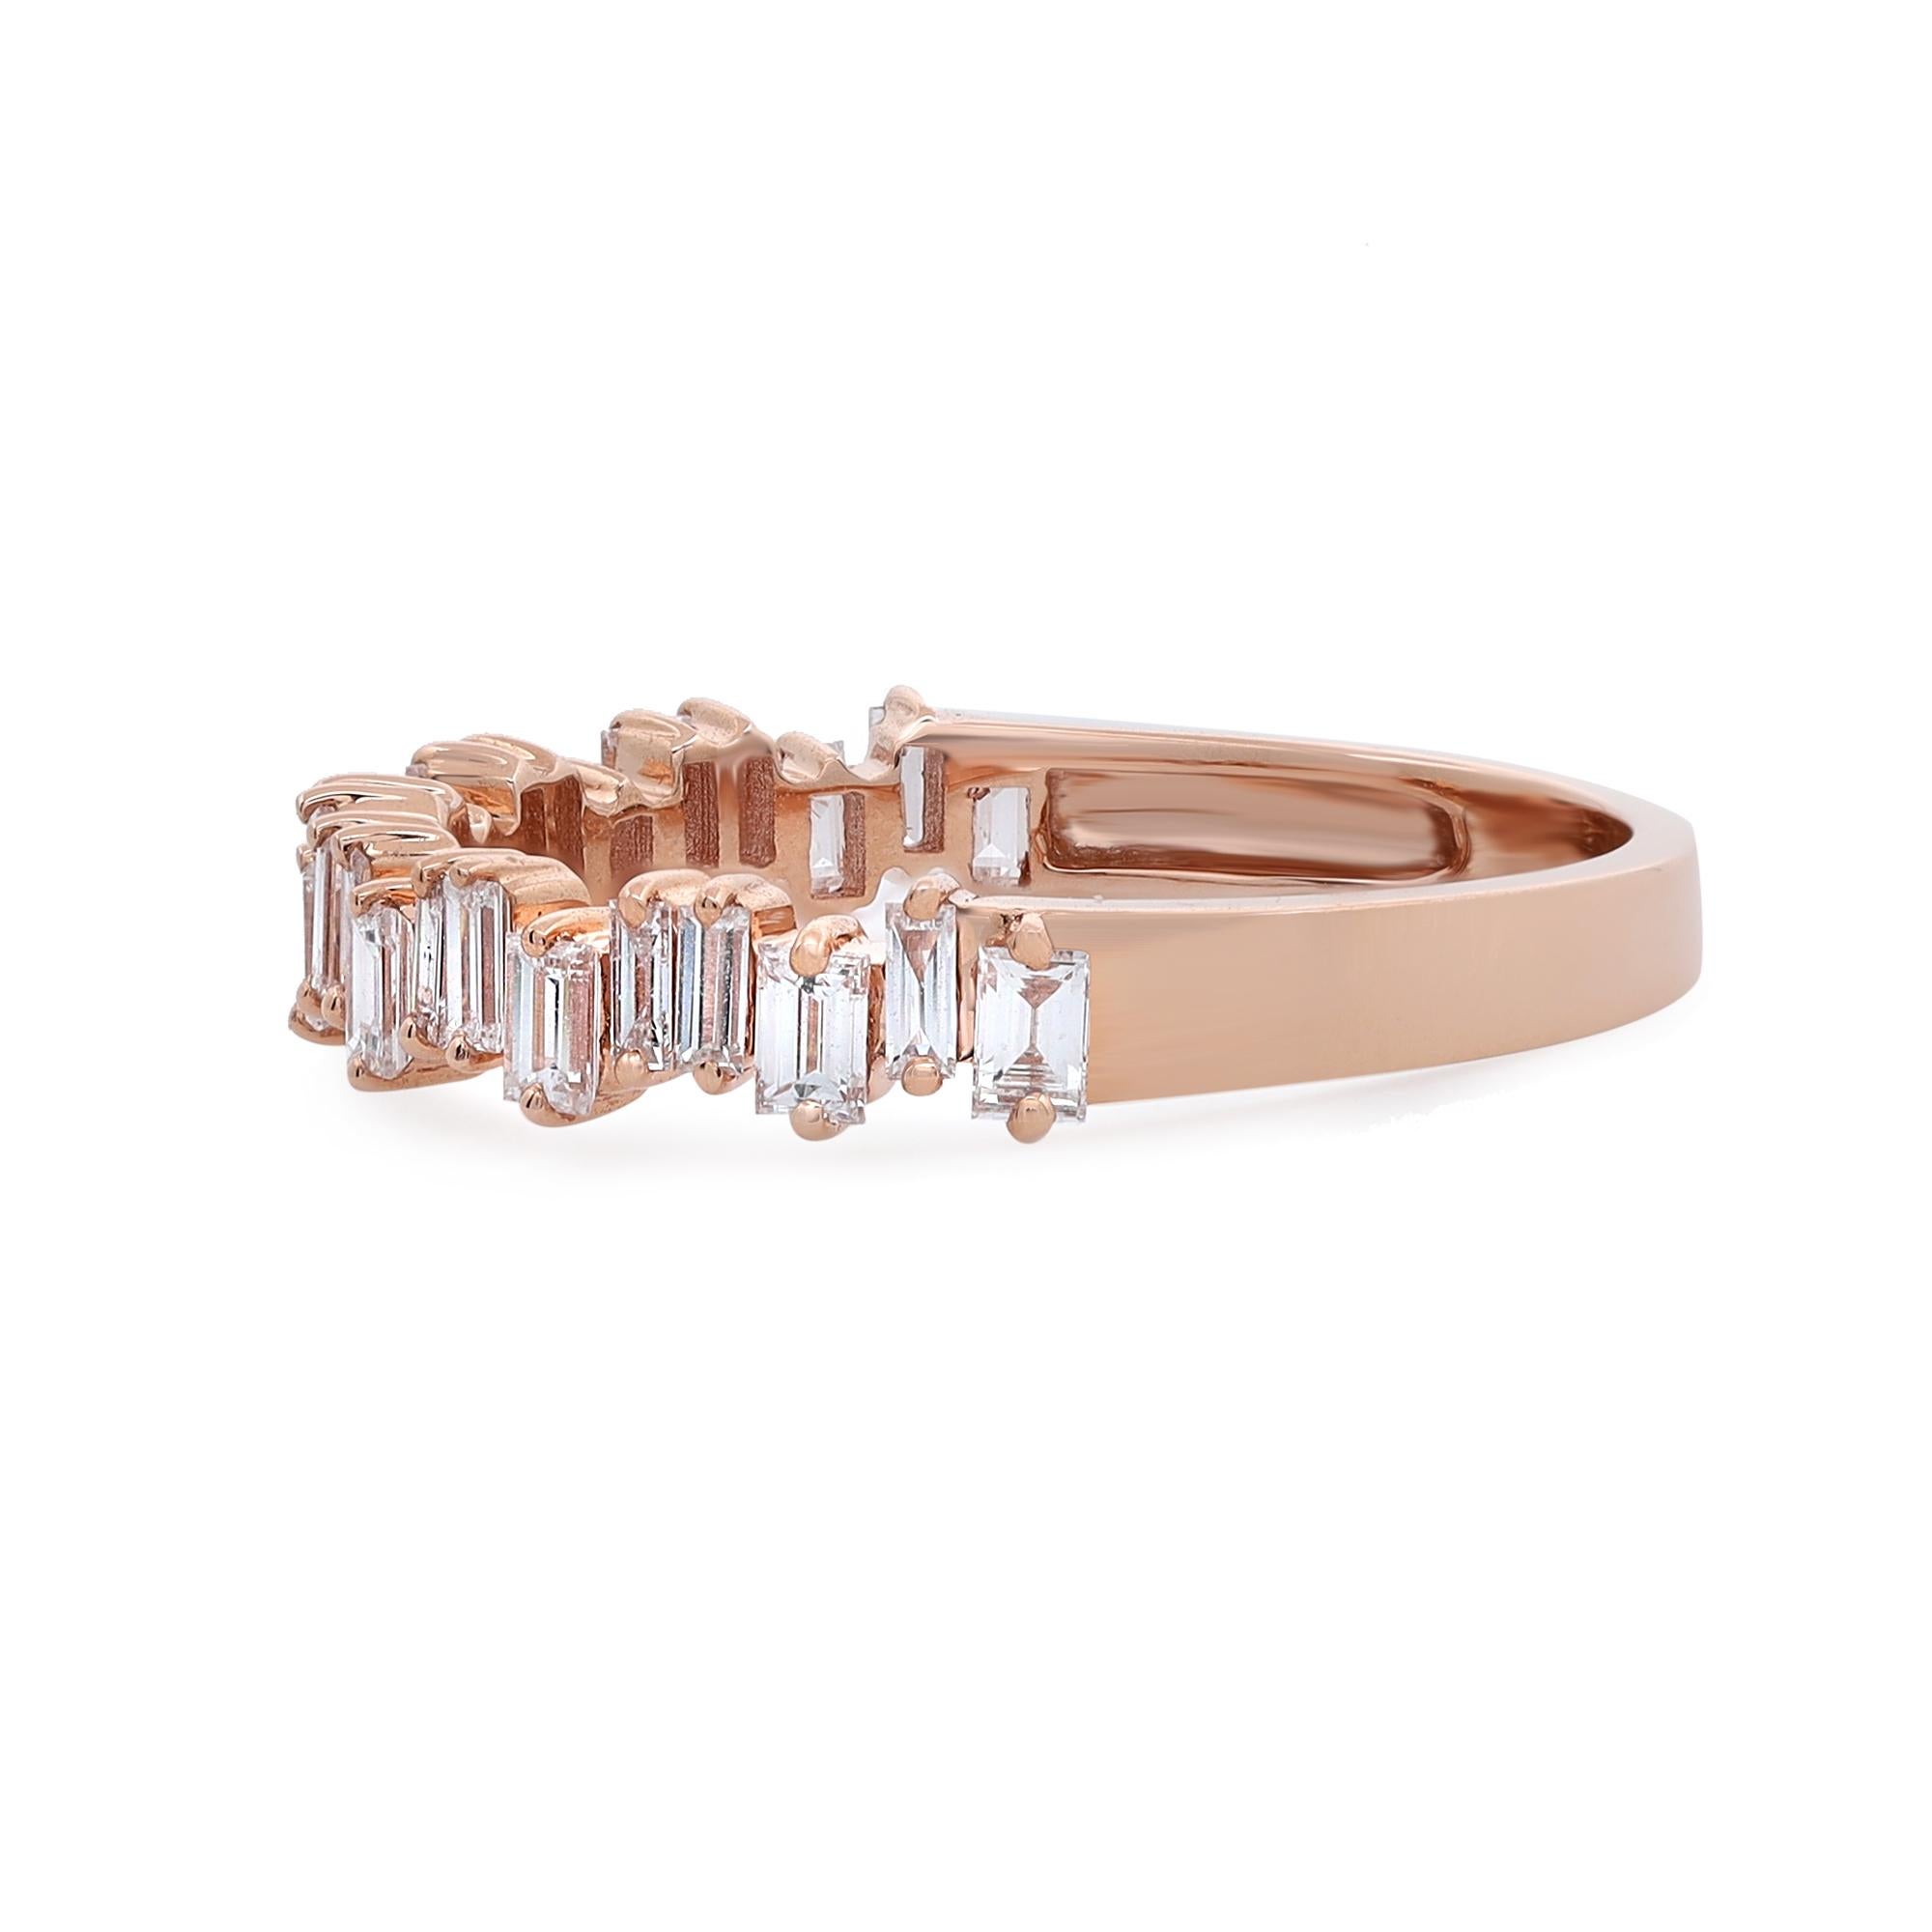 Rachel Koen 0.63Cttw Baguette Cut Diamond Ring 18K Rose Gold In New Condition For Sale In New York, NY